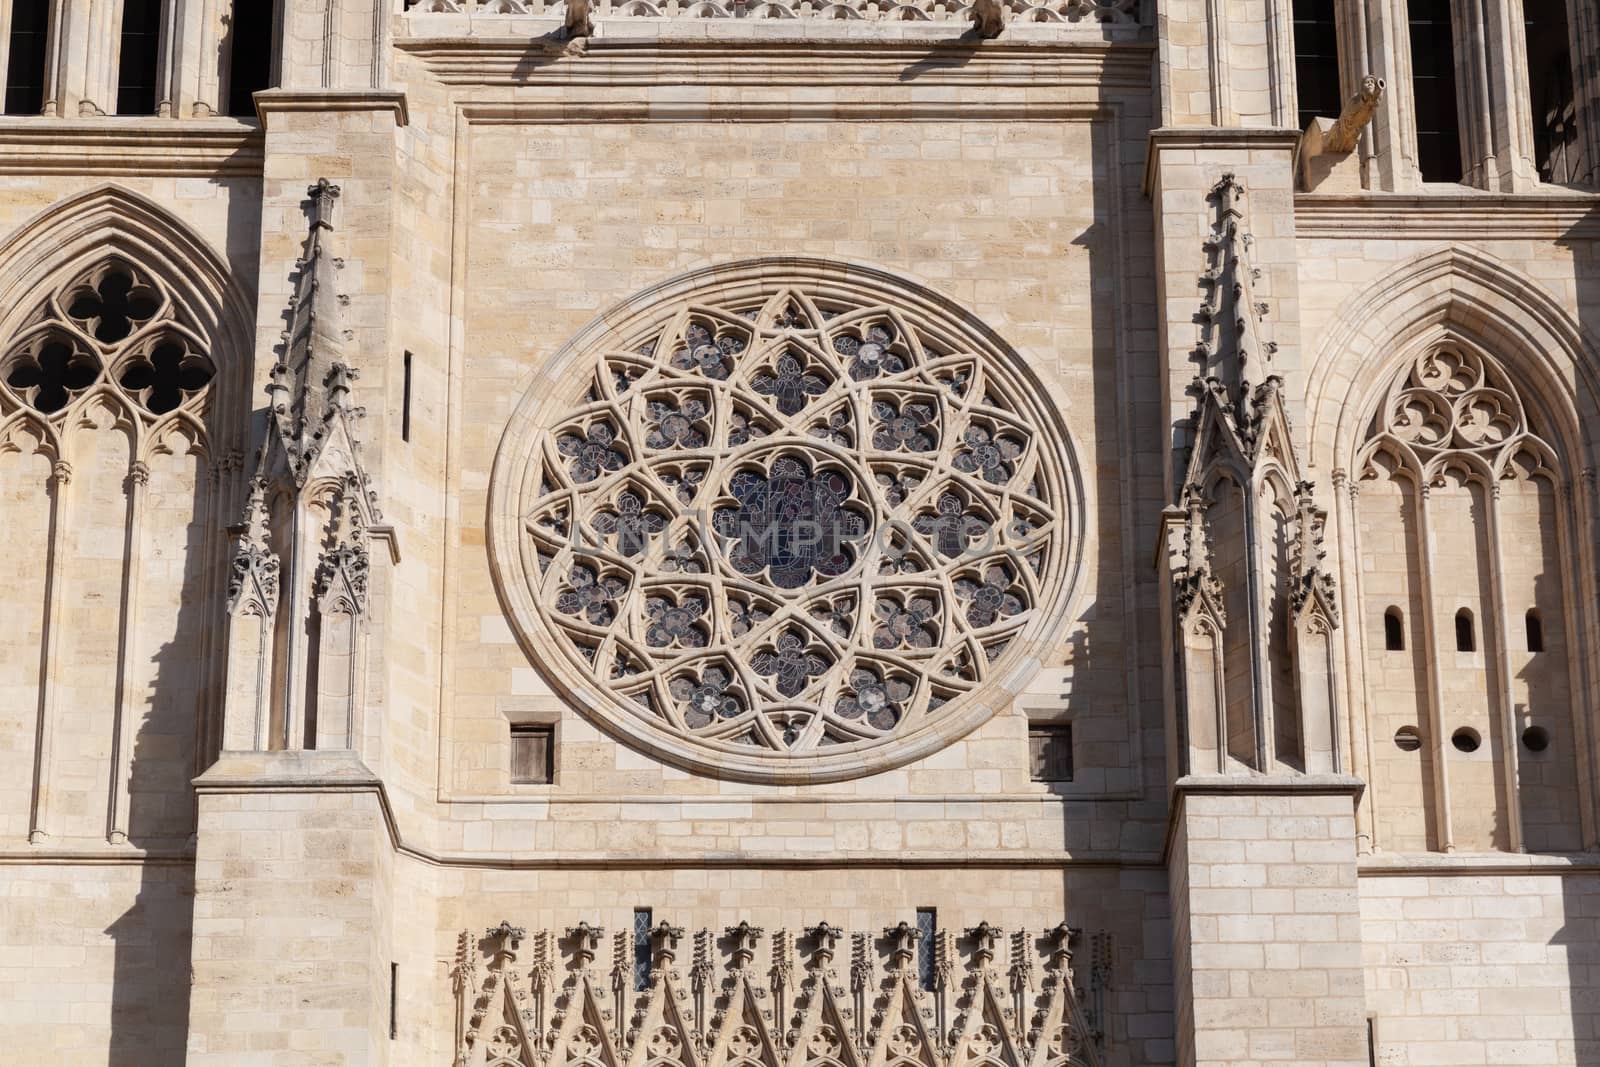 Rose window of Bordeaux Cathedral Saint-Andre, Bordeaux, France by vlad-m